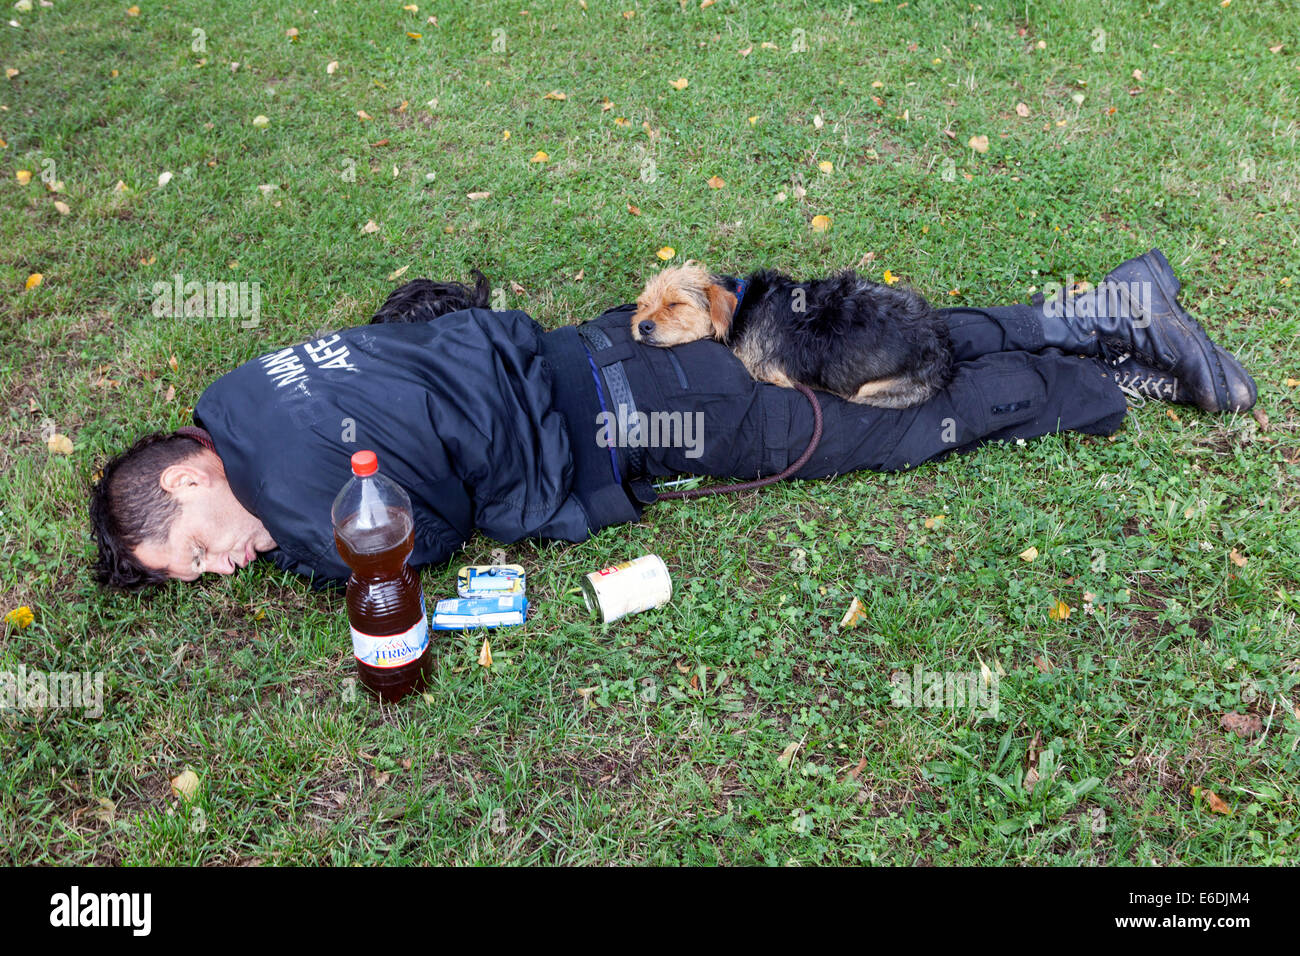 Sleeping drunk man, dog friendship, Drunk asleep, man and dog friends couple Stock Photo